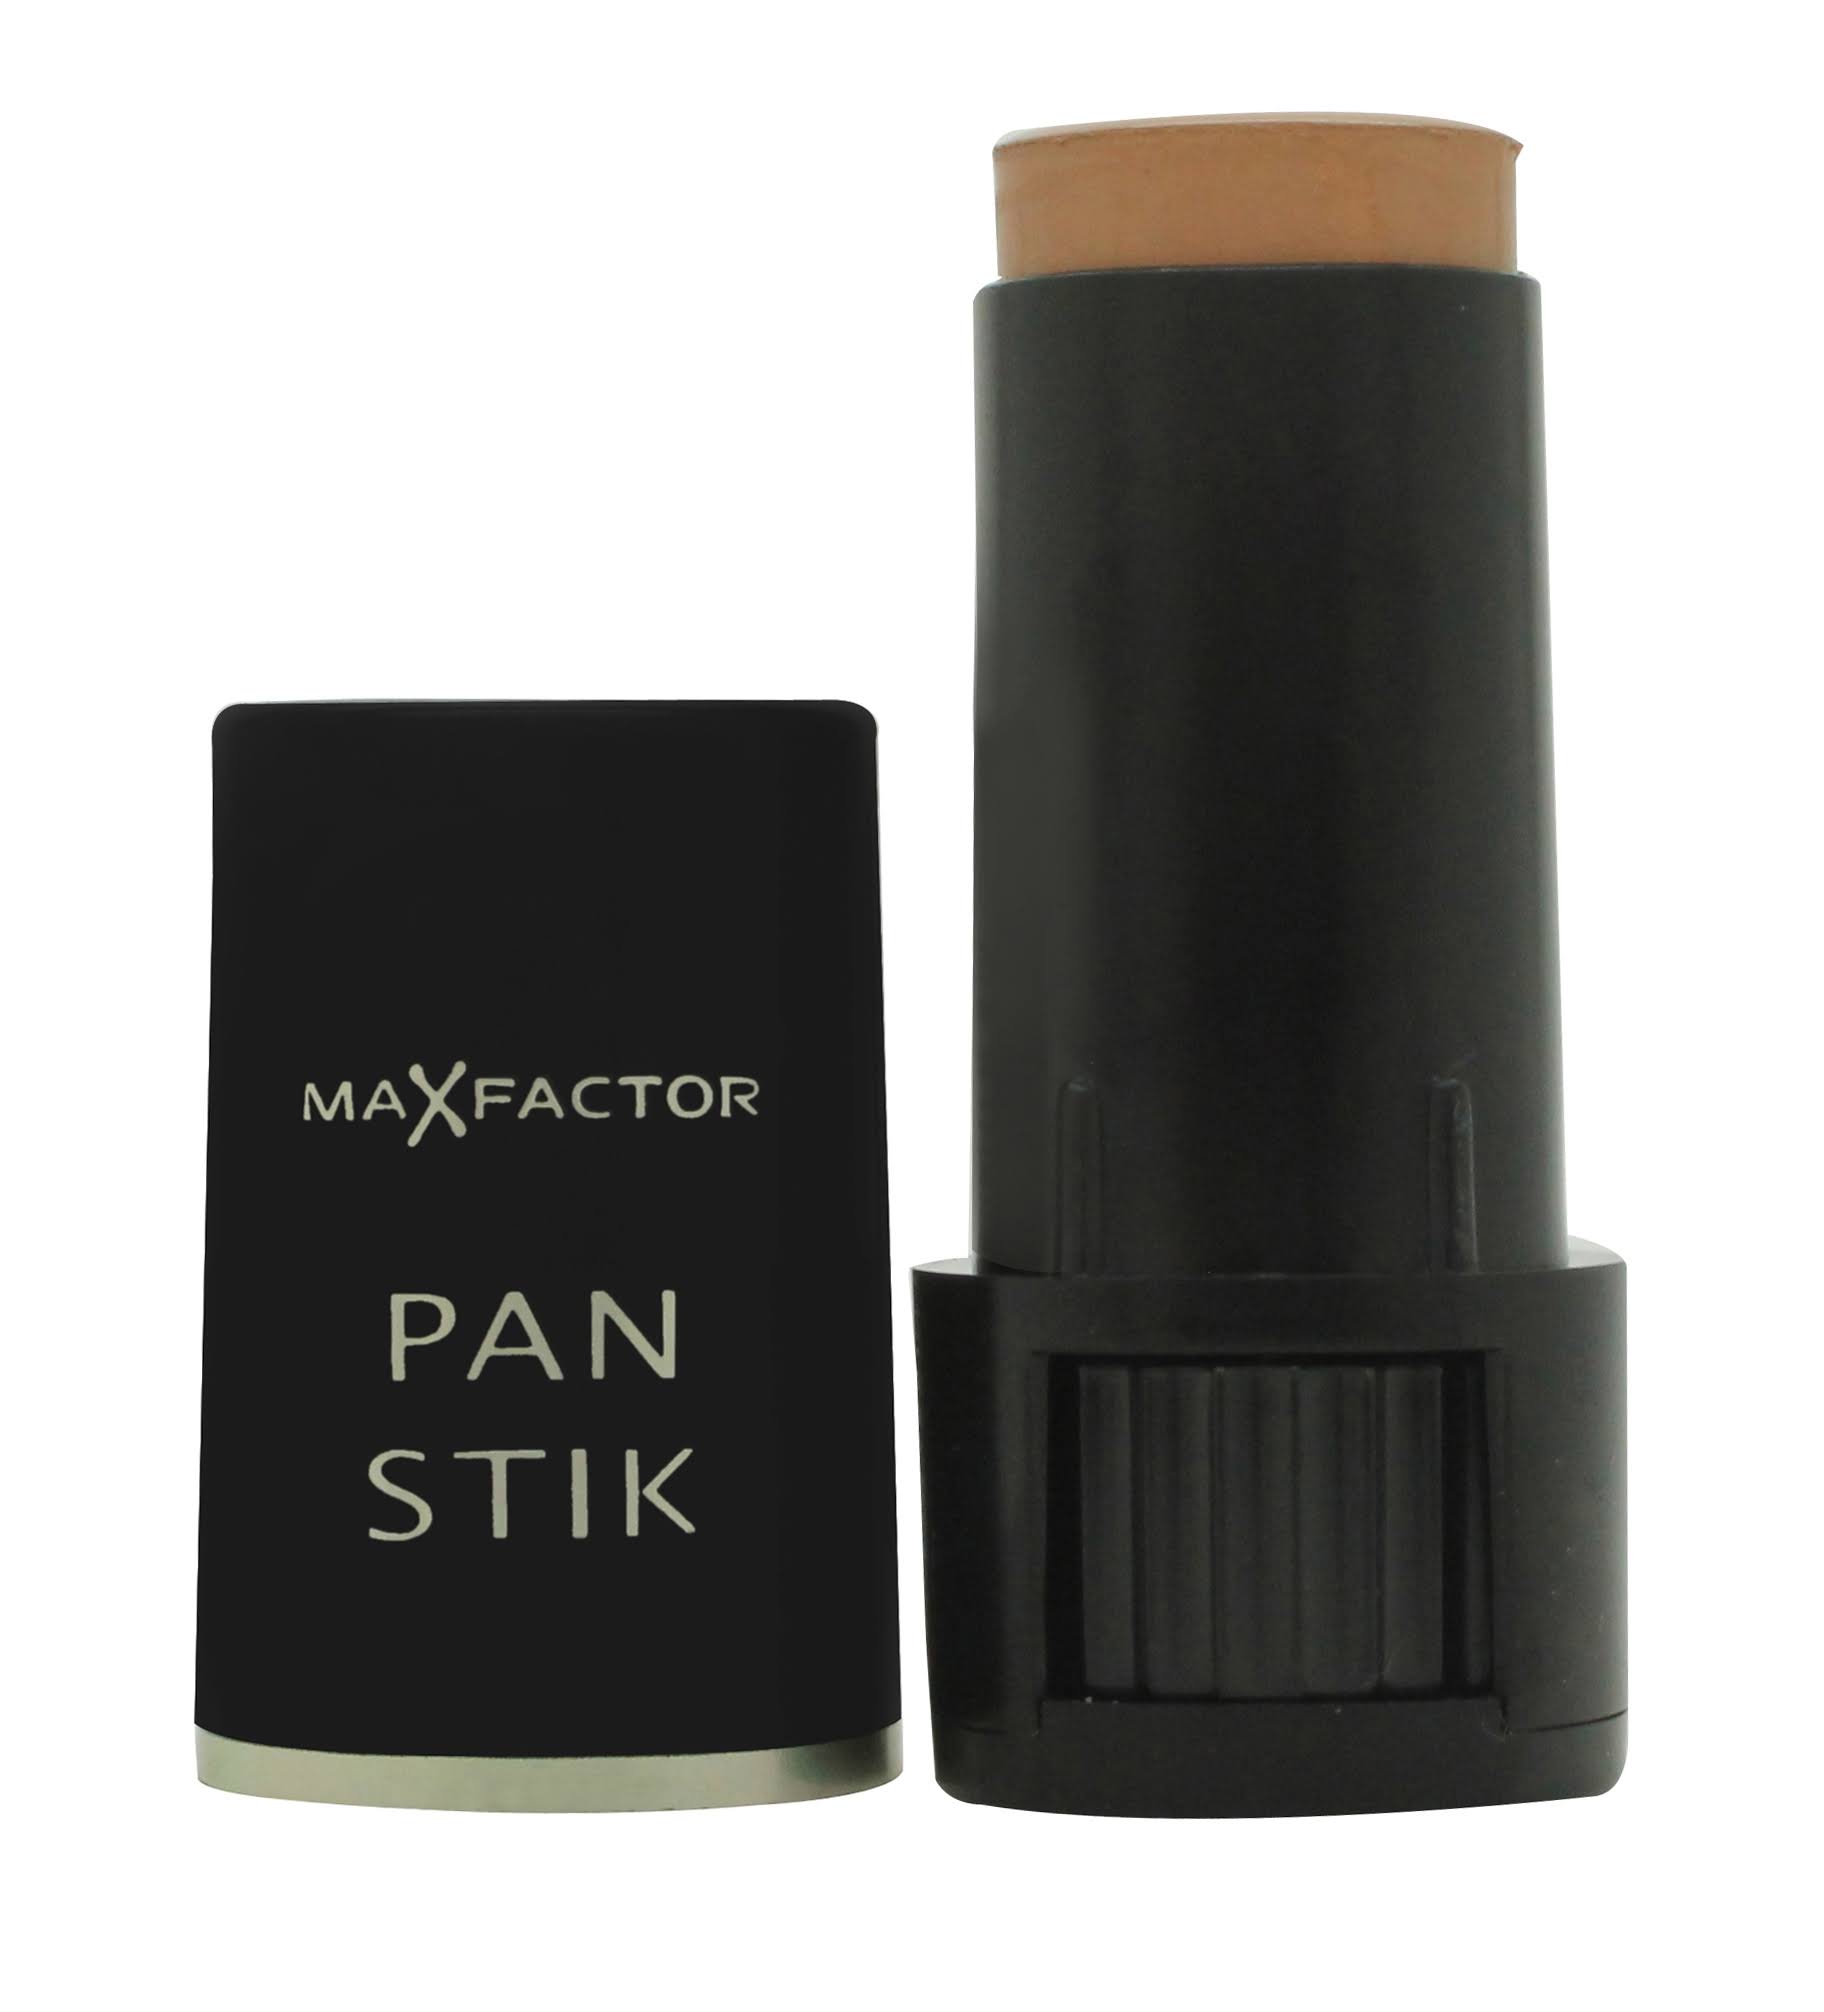 Max Factor Panstik Foundation - 14 Cool Copper, 9g